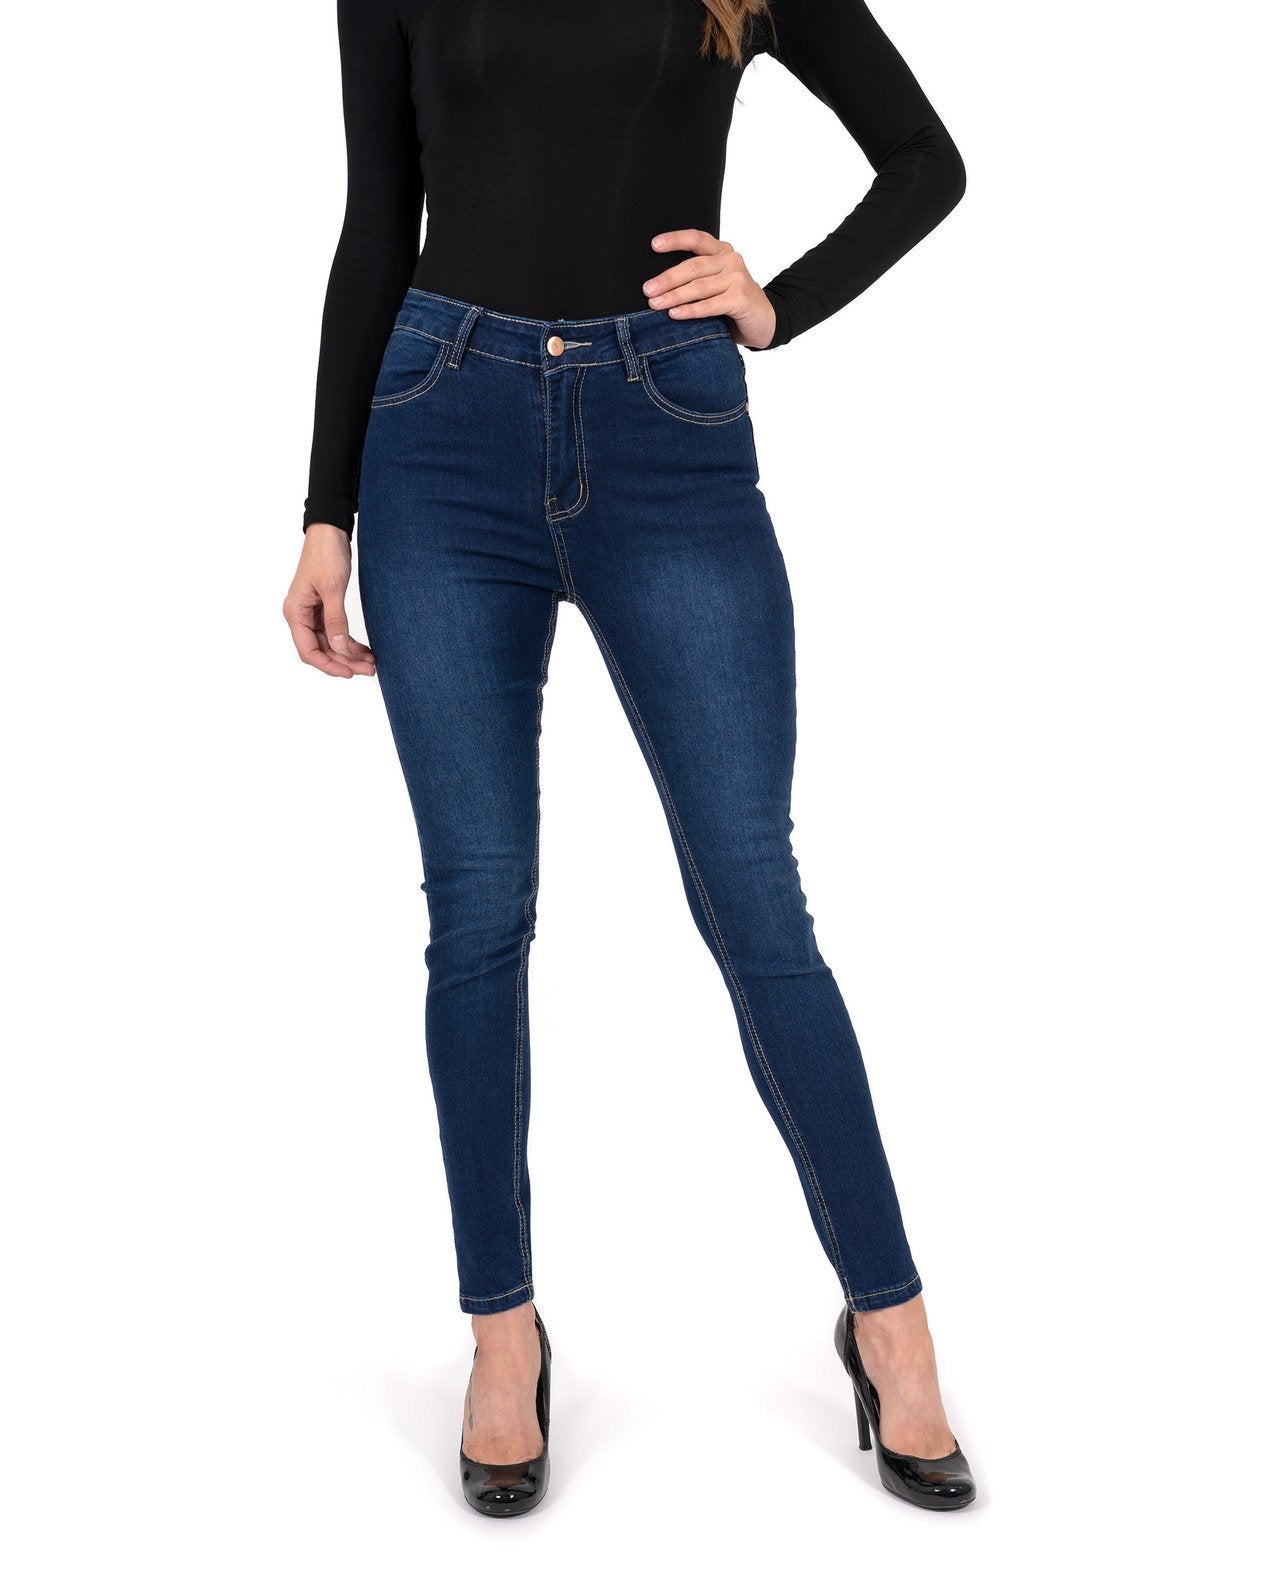 Women's Alexis High Waist Skinny Jeans - Women - Apparel - Pants - Jeans - Benn~Burry